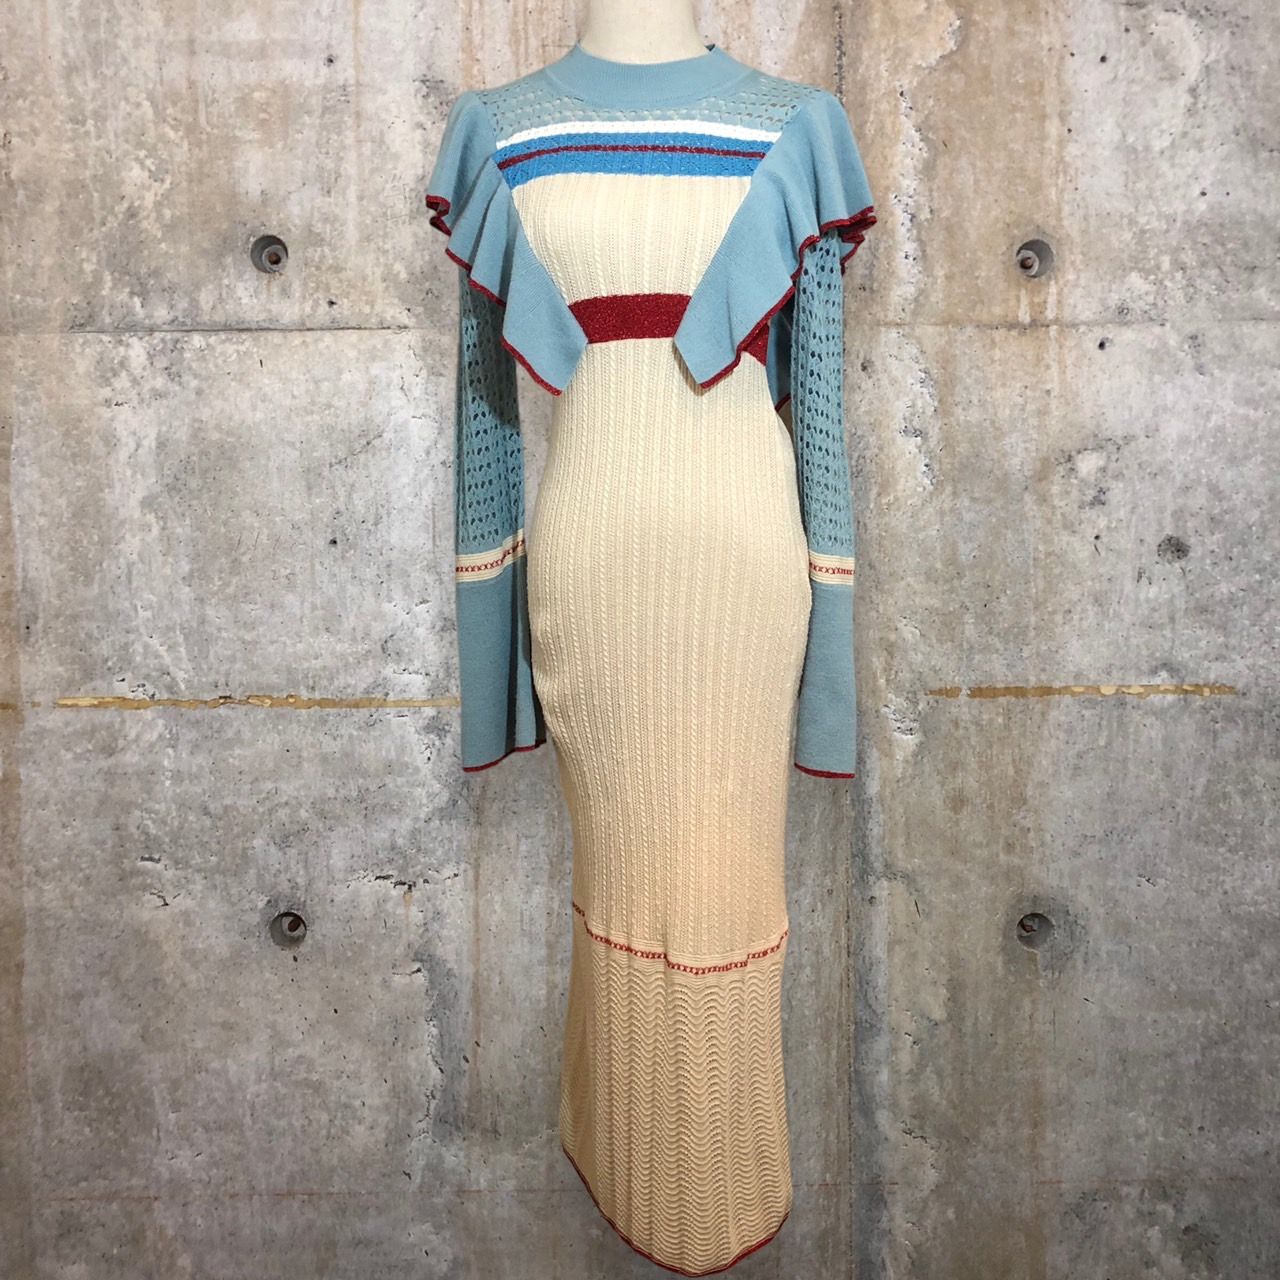 mame kurogouchi(マメクロゴウチ) 18SS mame Nostalgic Pattern Knit Dress/ワンピース/ドレス  MM18SS-KN040 1 ブルー - メルカリ